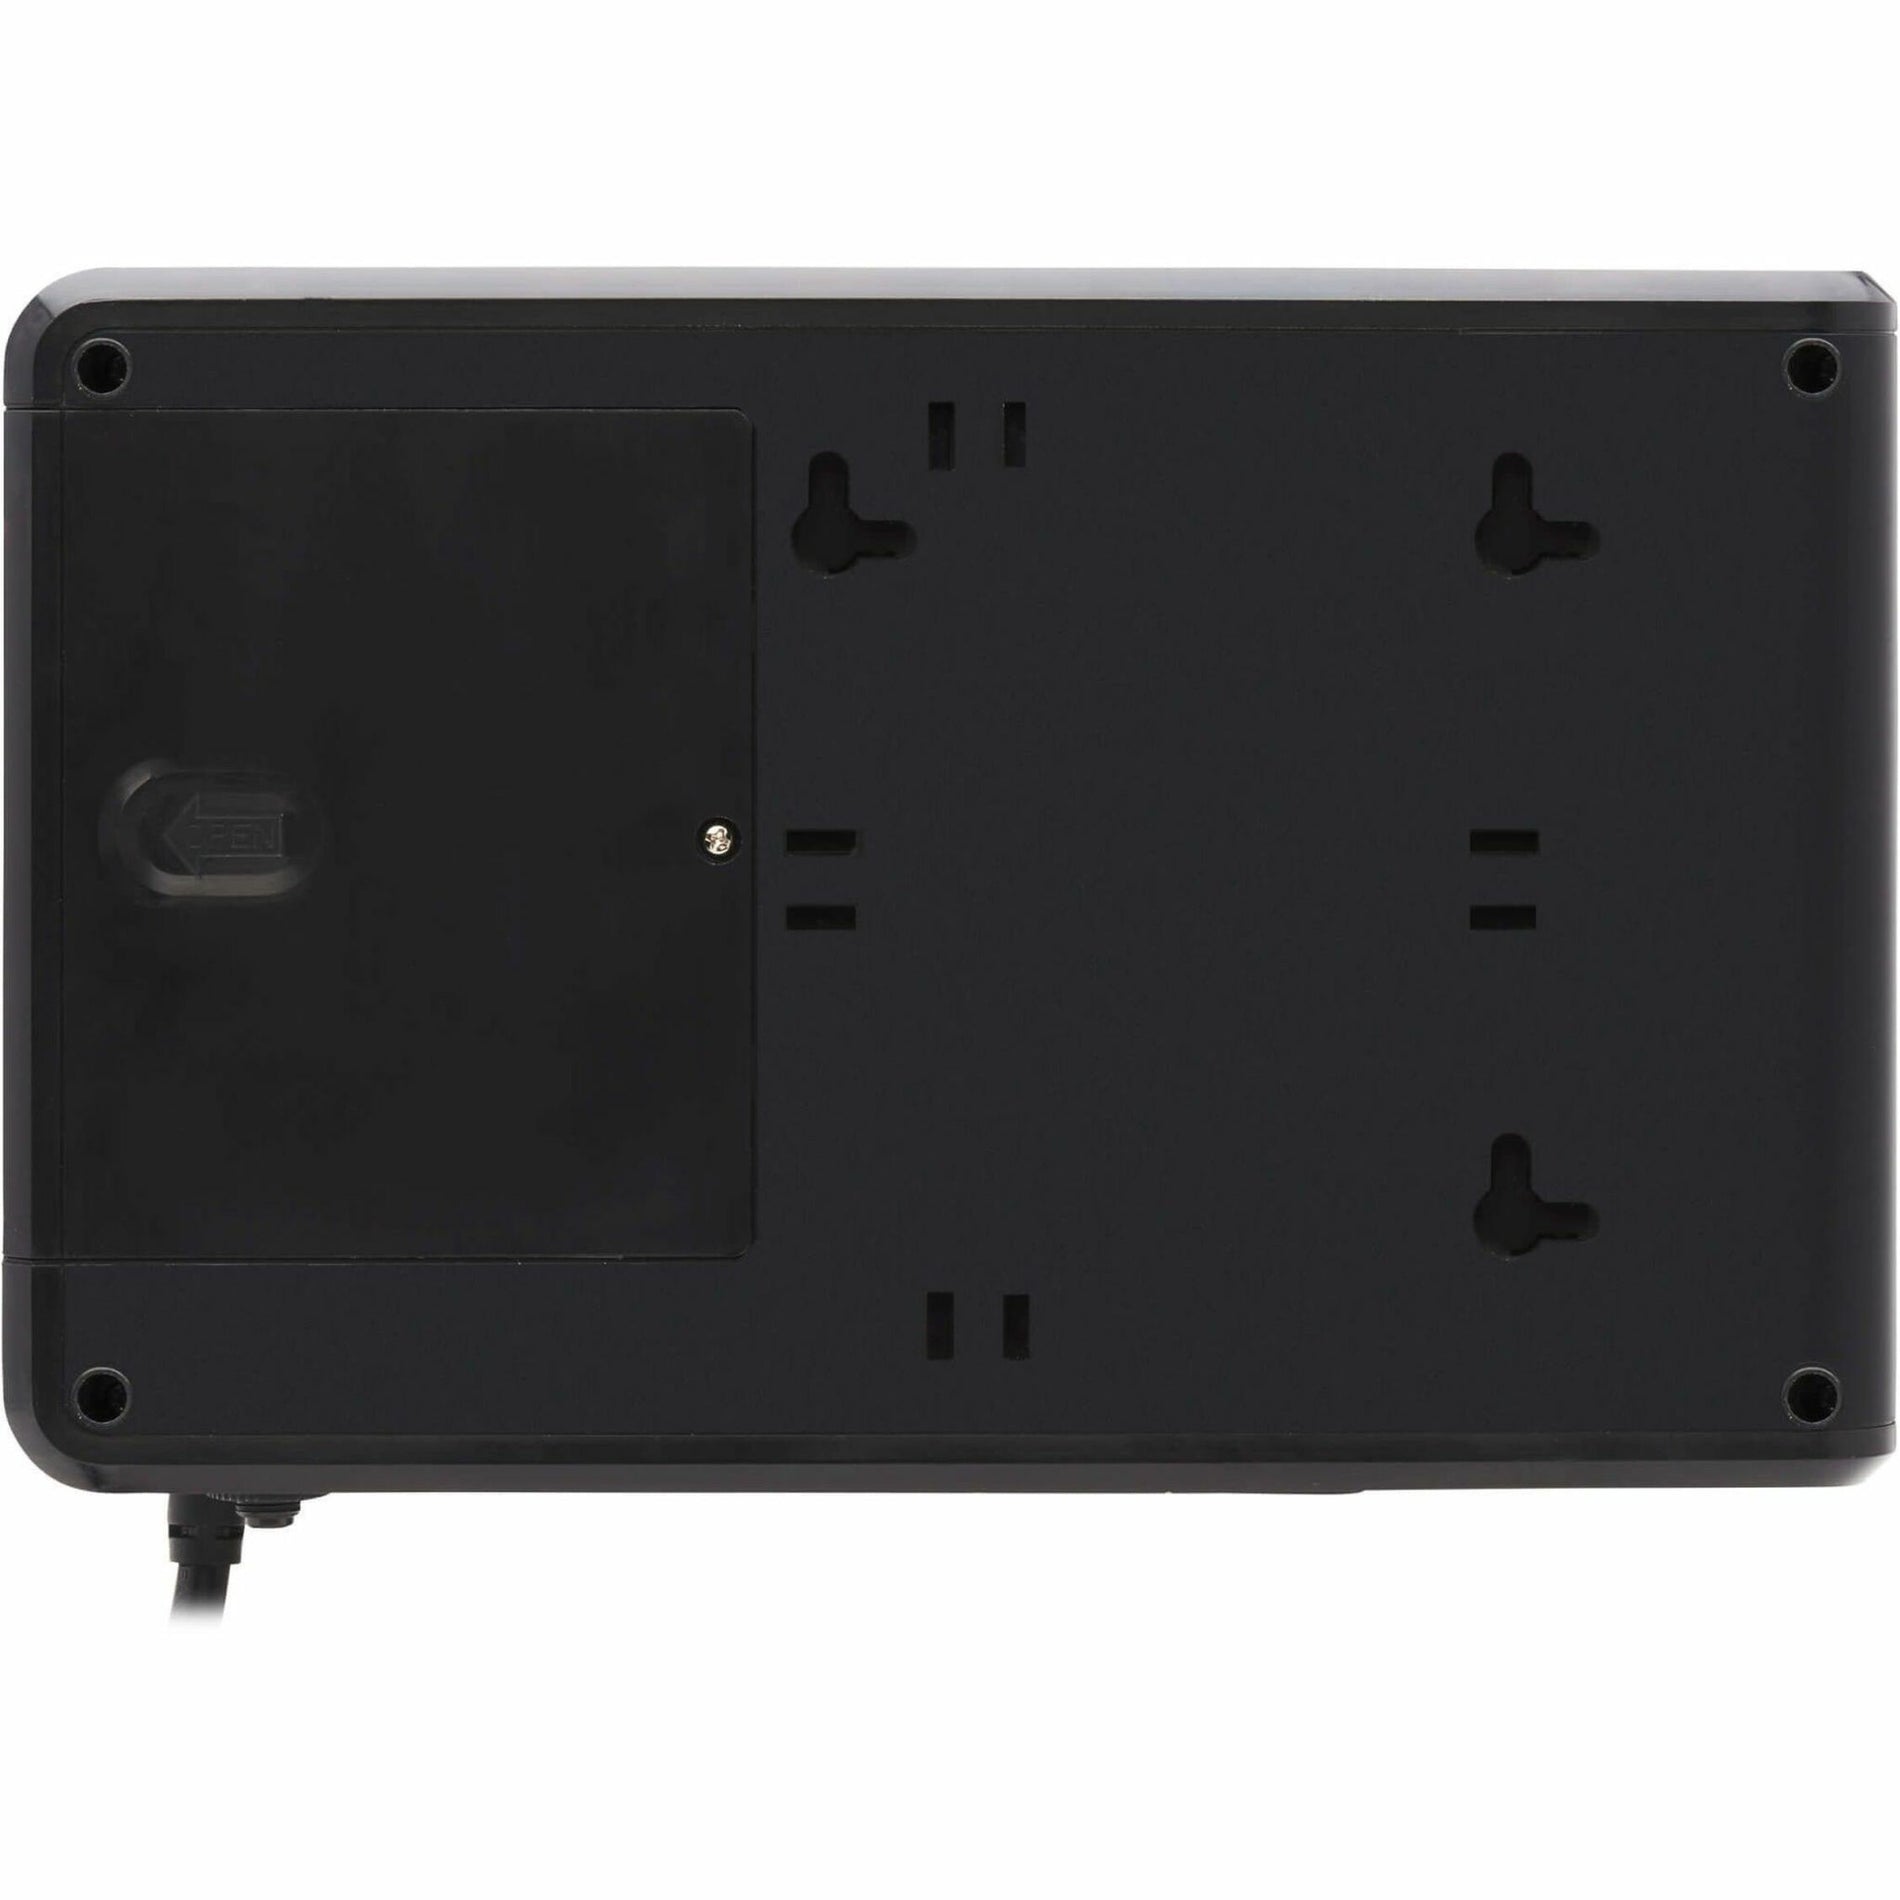 Tripp Lite BC850R 850VA Desktop/Surface/Wall Mountable UPS, Energy Star, 2 Year Warranty, RoHS Certified